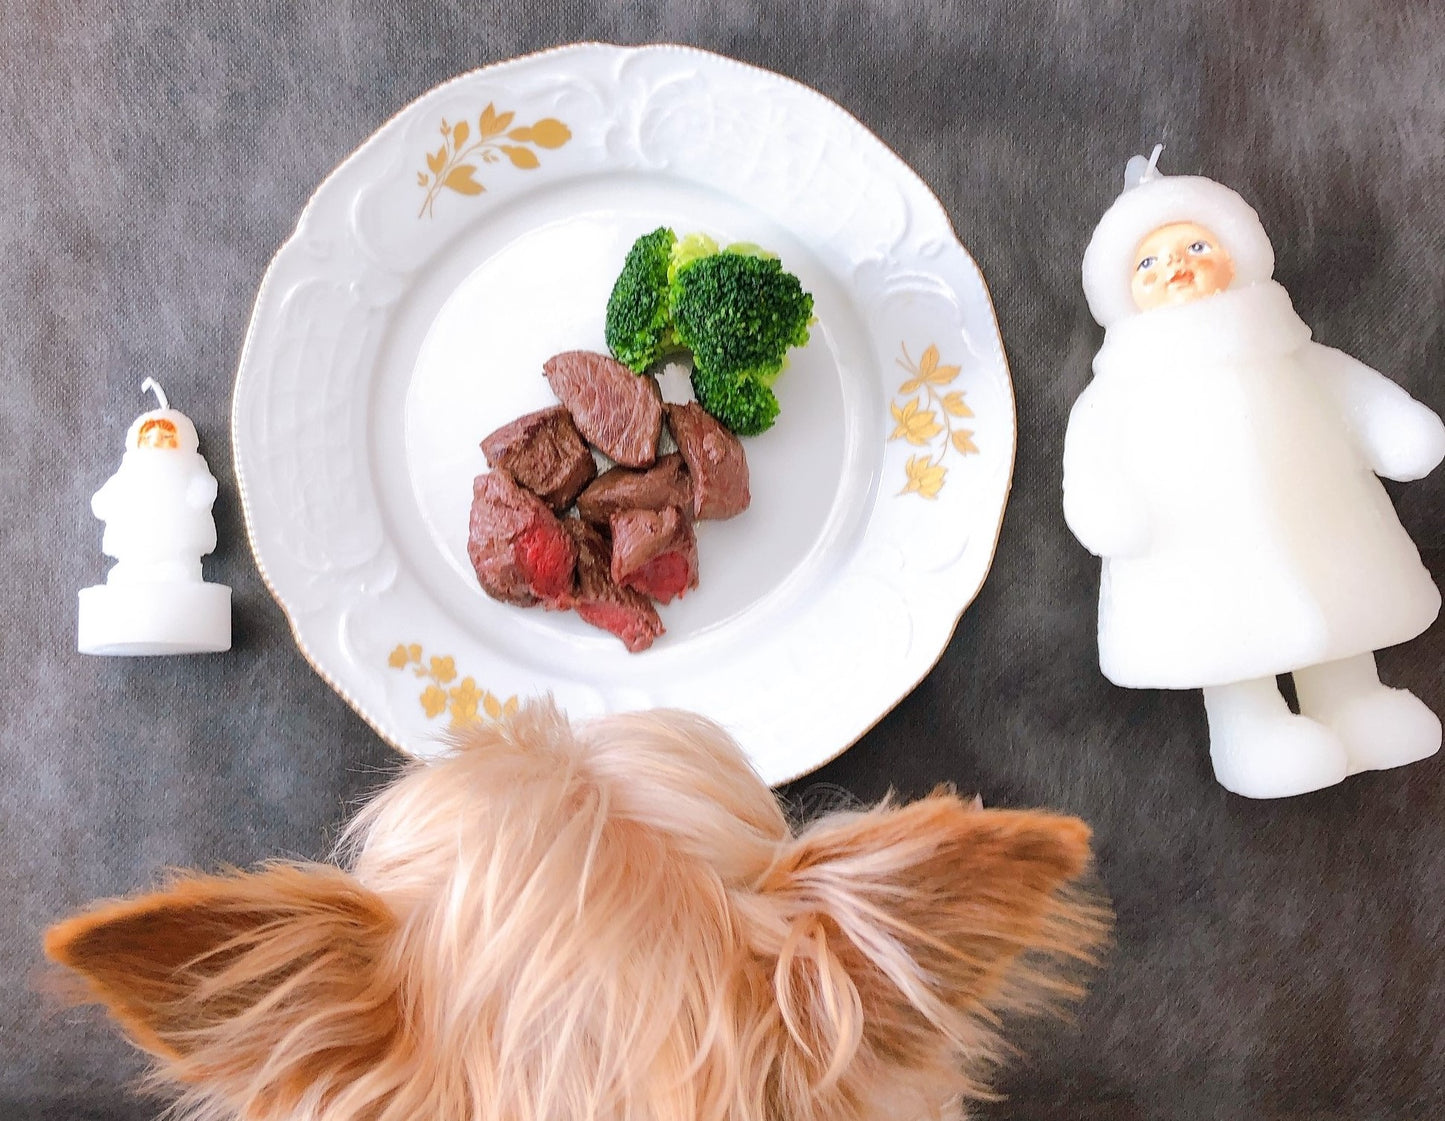 Zasshu® [Square cut bag] Venison Ezo deer meat Ezo venison Ezoshika meat [Highest quality from Hokkaido] Dogs Cats Pet food blocks Chopped